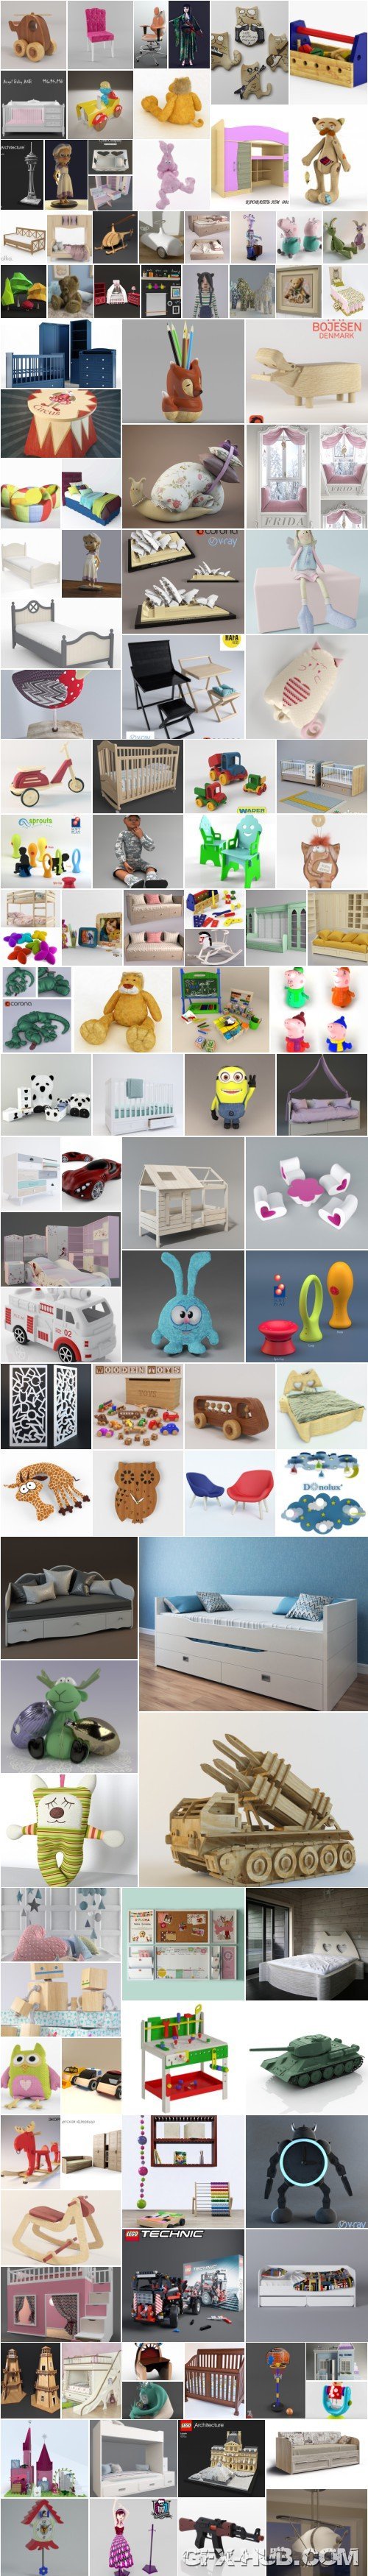 Children's Room Items 3D models Bundle